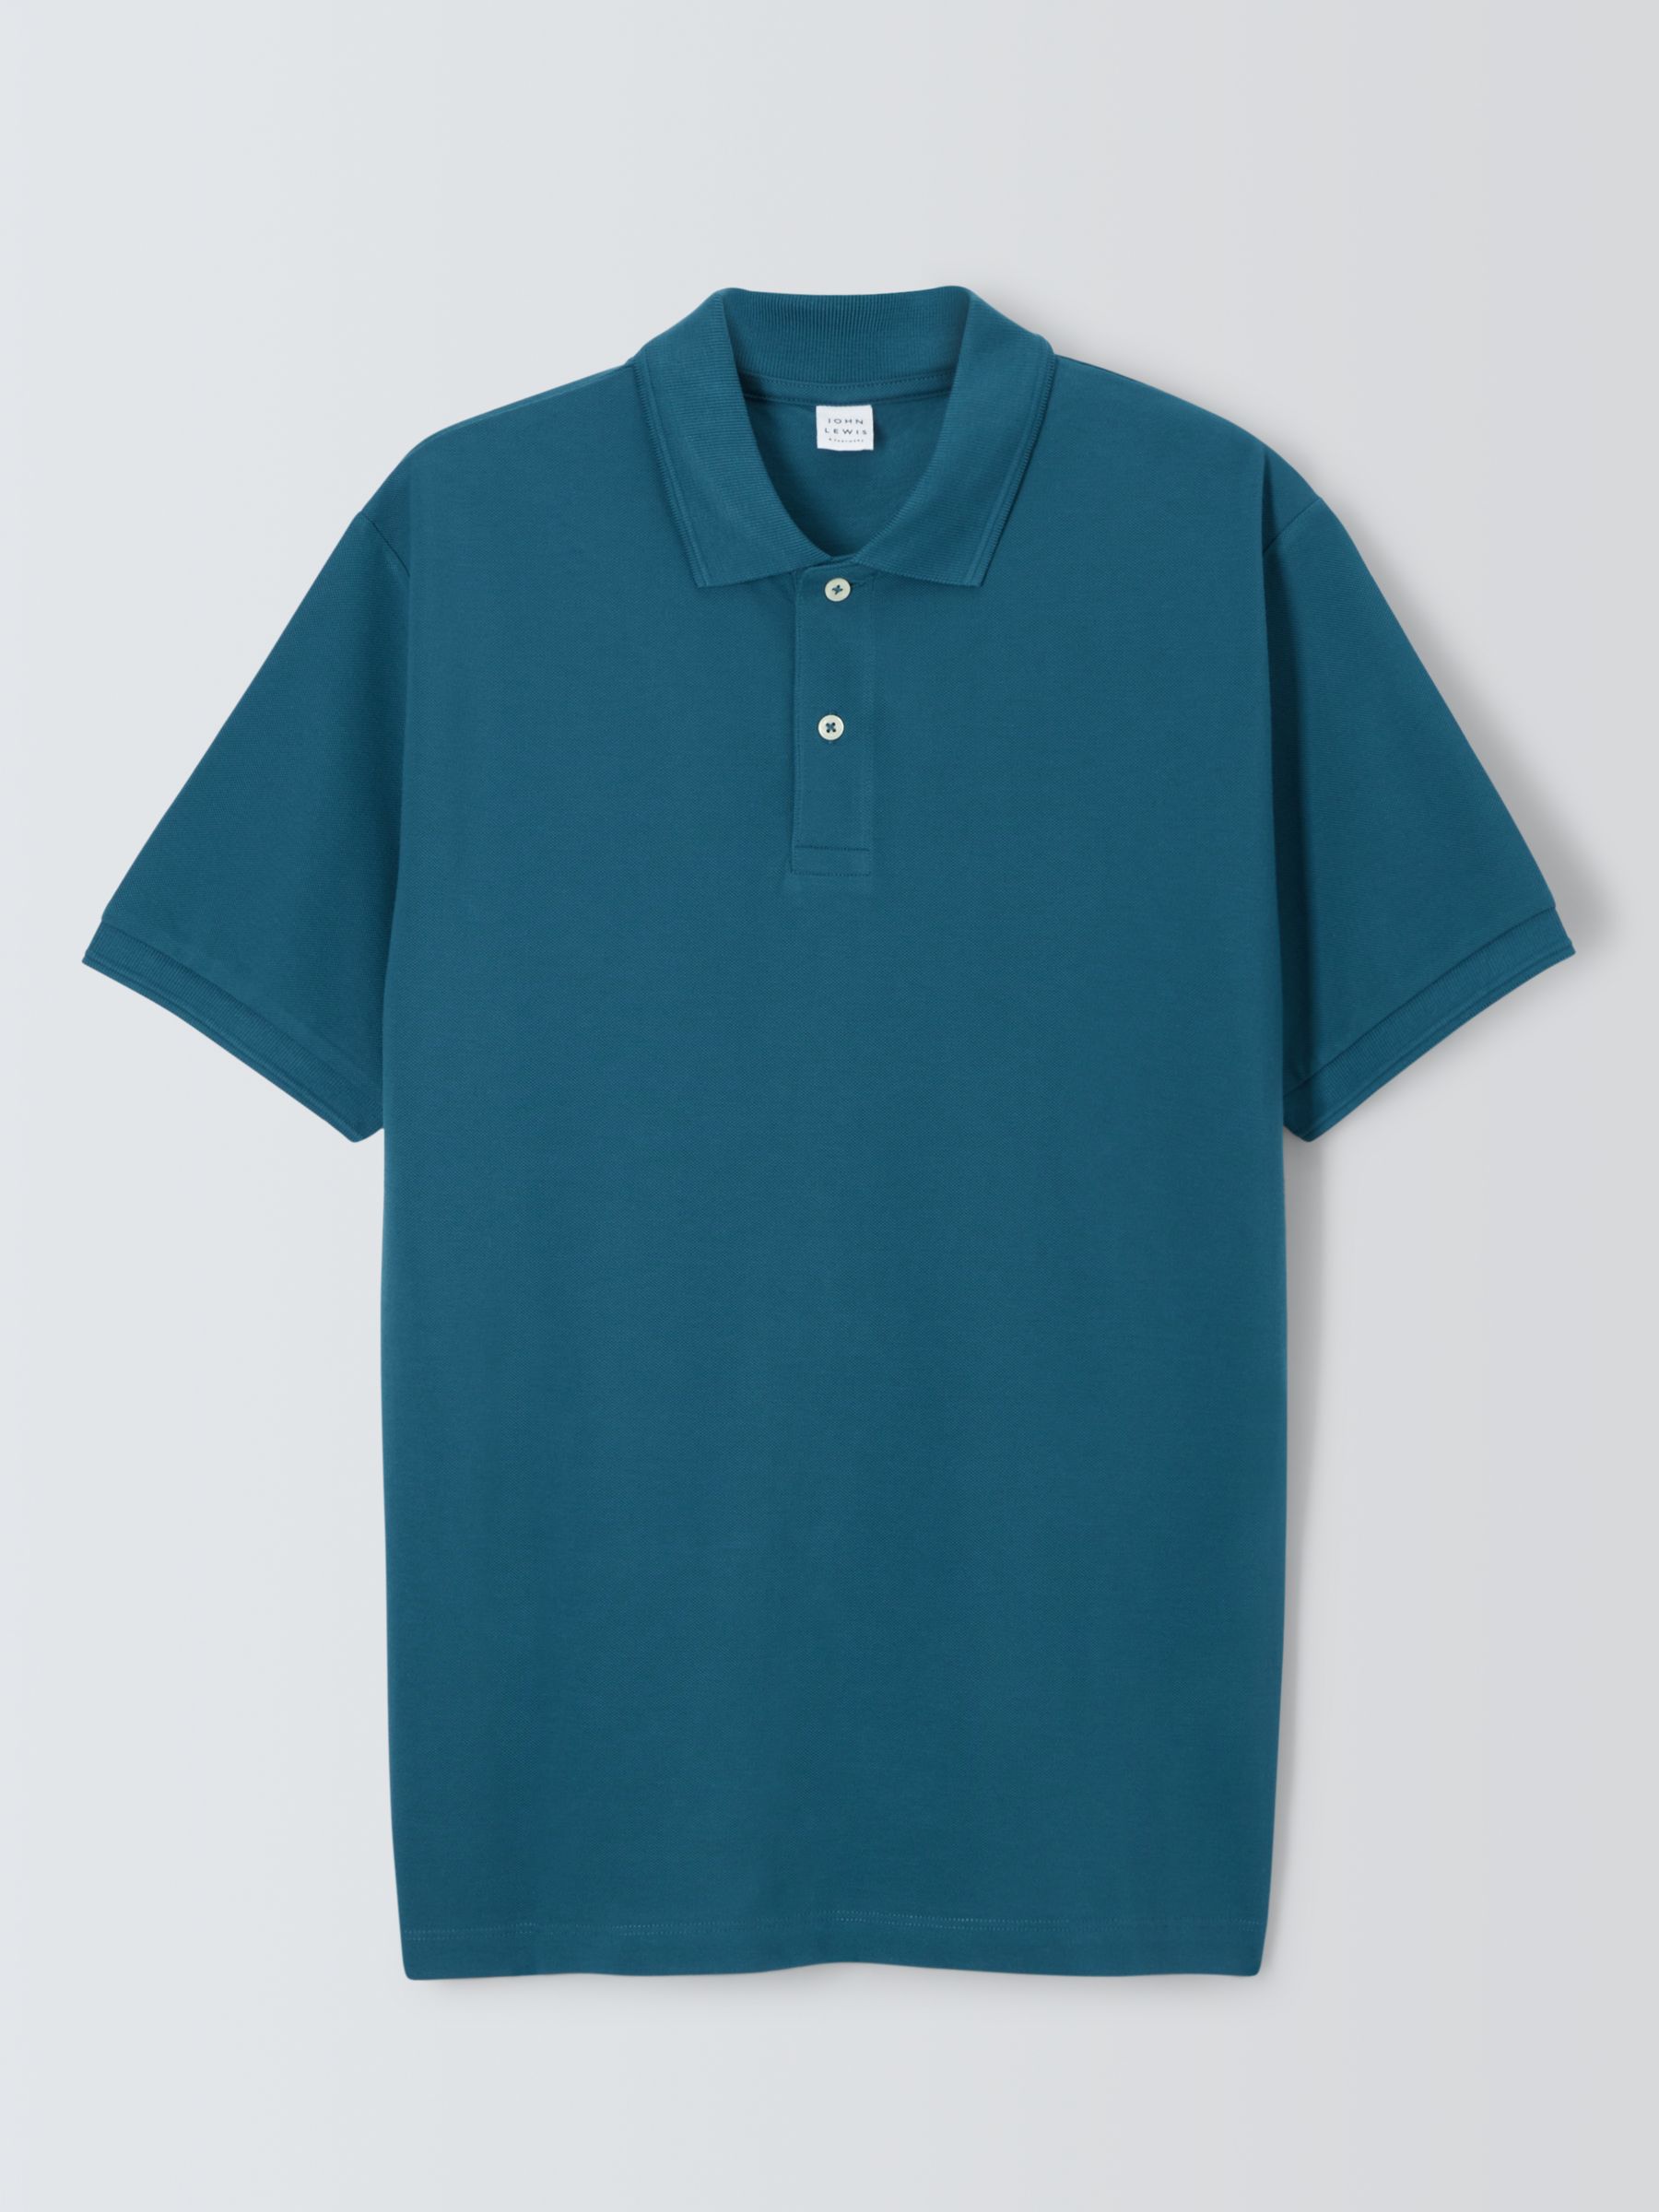 John Lewis Supima Cotton Jersey Polo Shirt, Mallard Blue, S